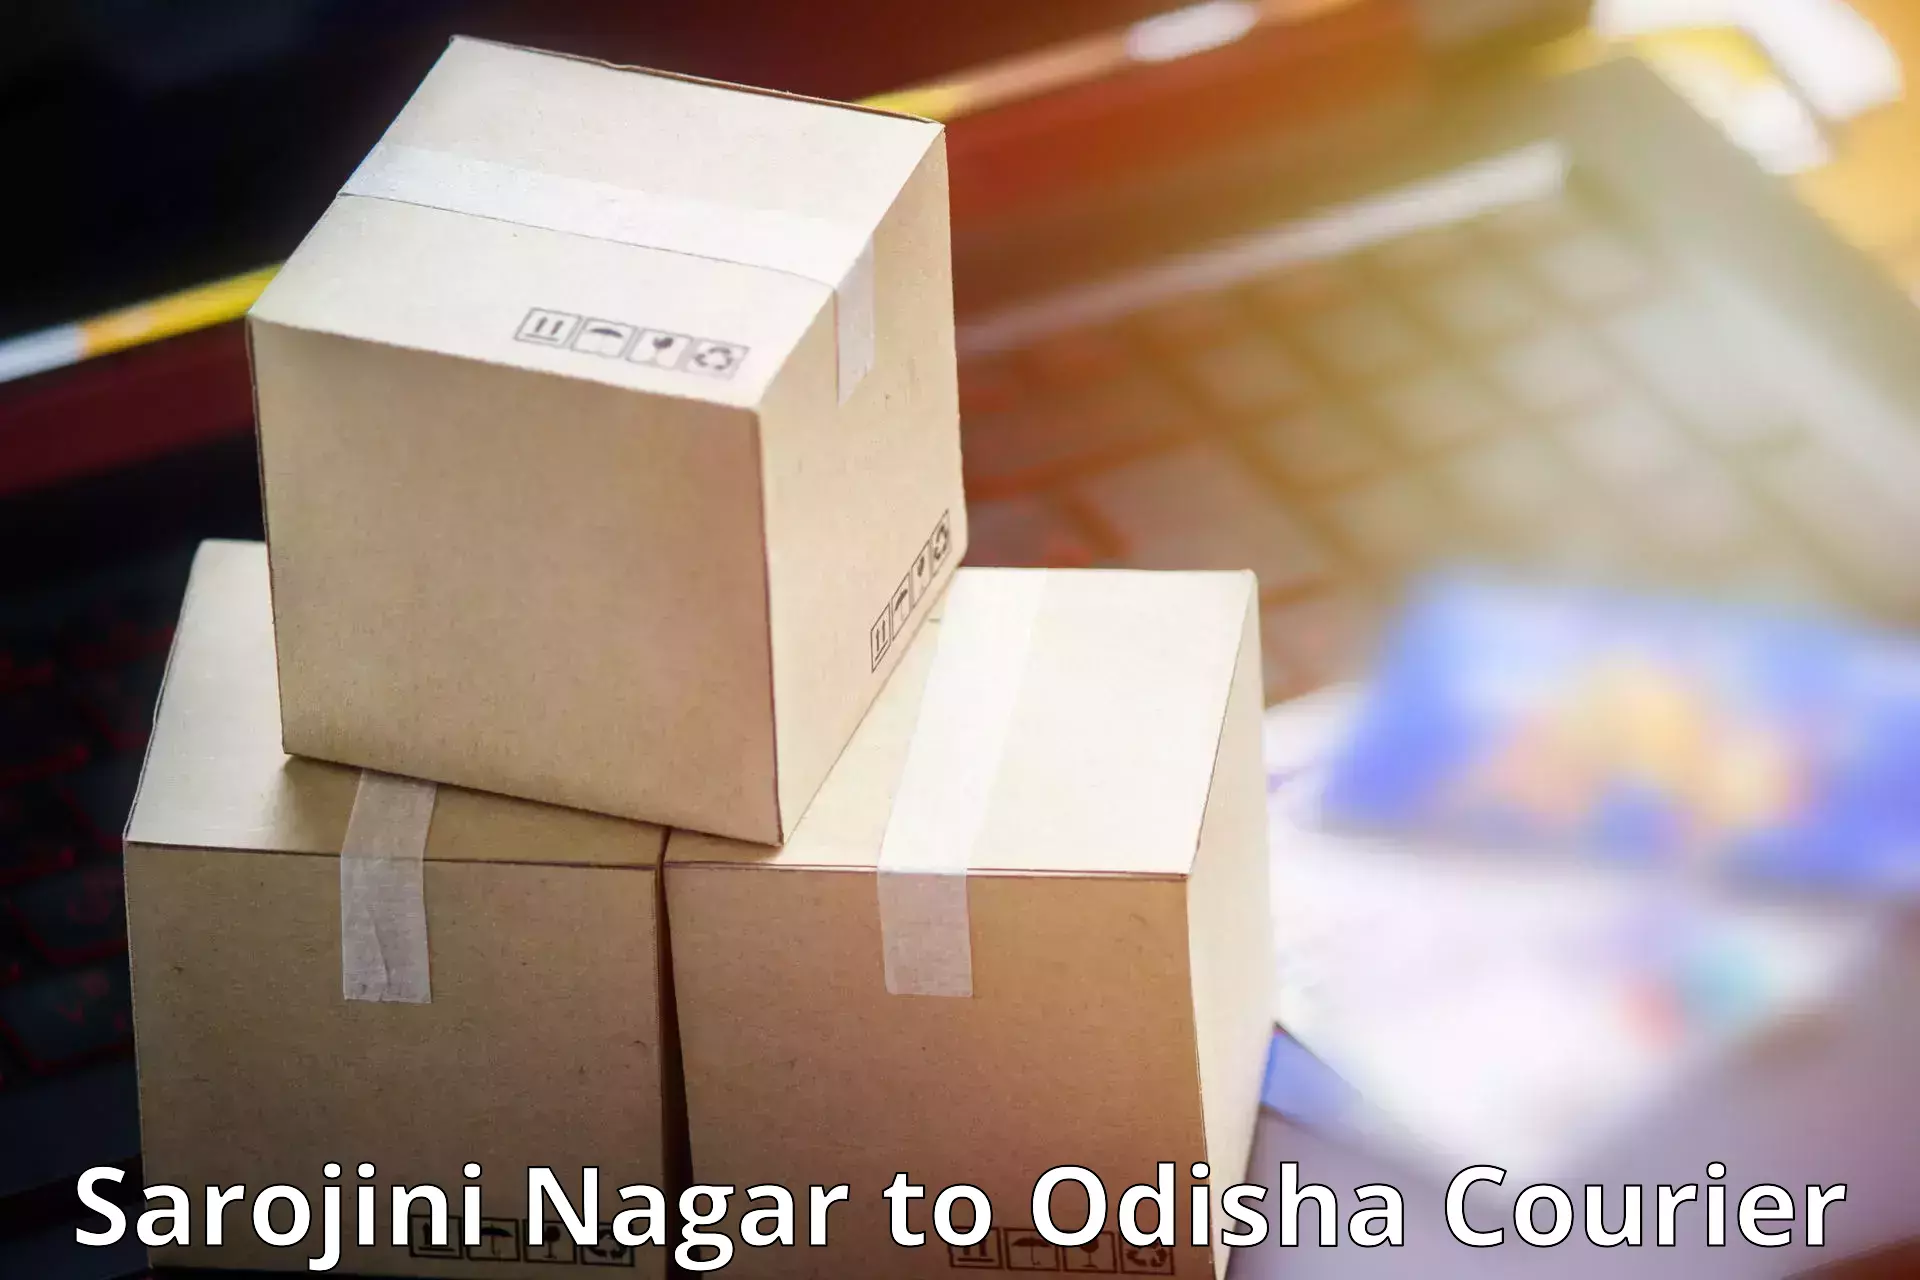 Courier service efficiency Sarojini Nagar to Joda